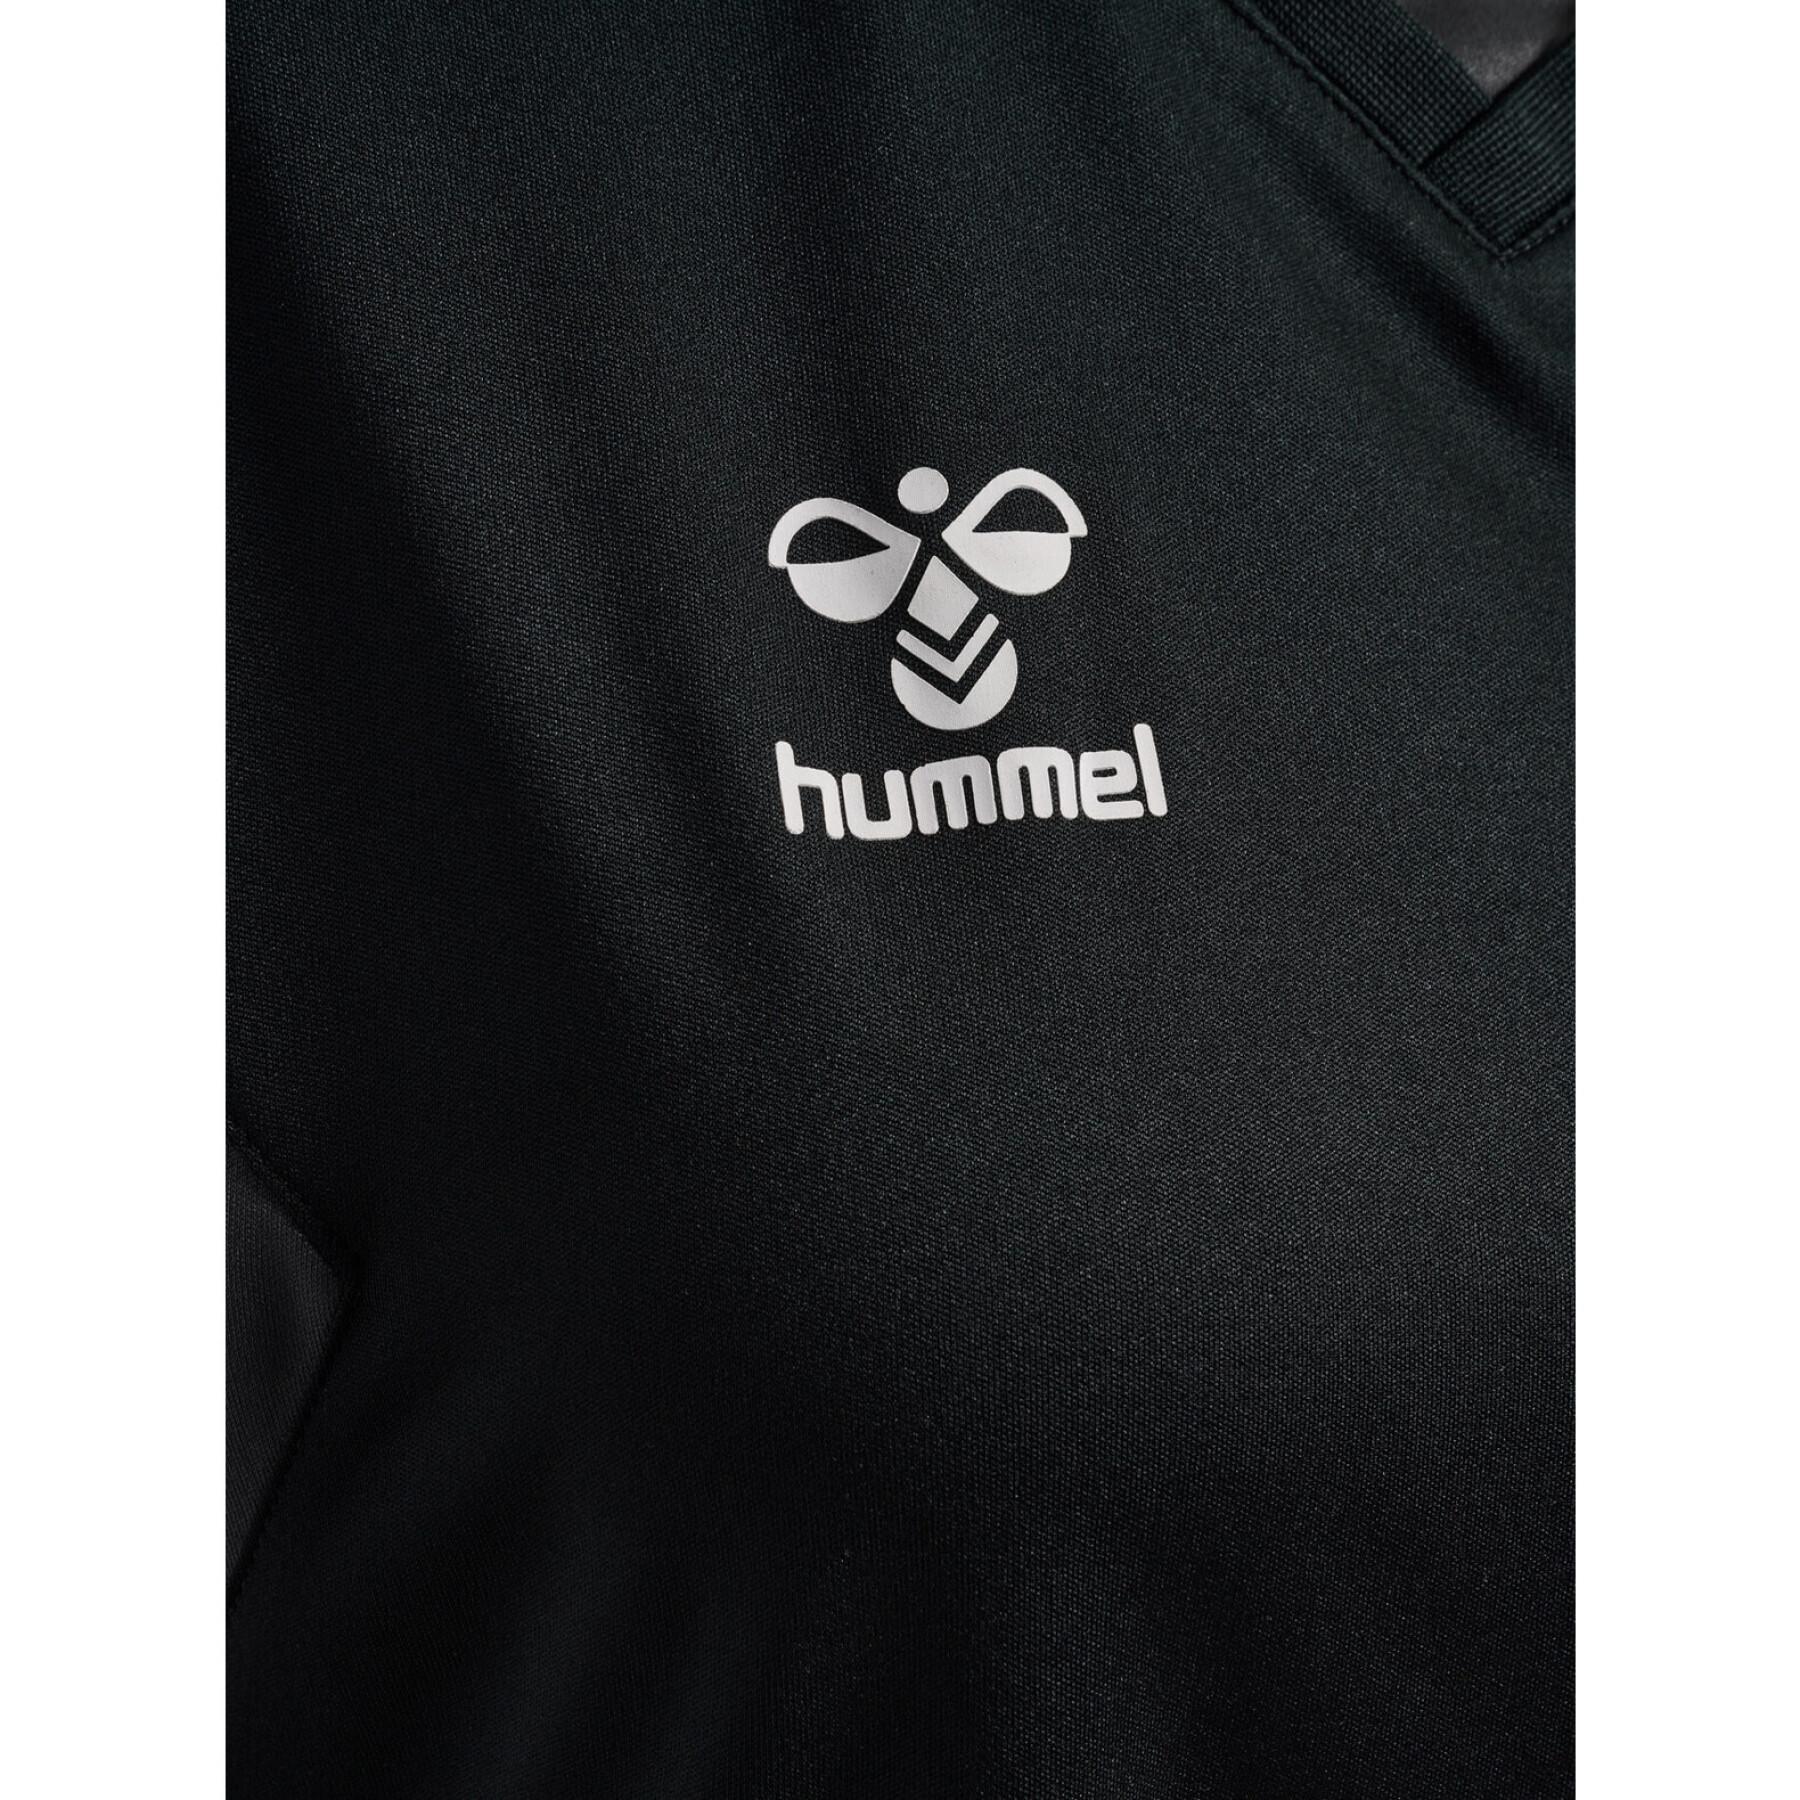 Women's jersey Hummel Authentic